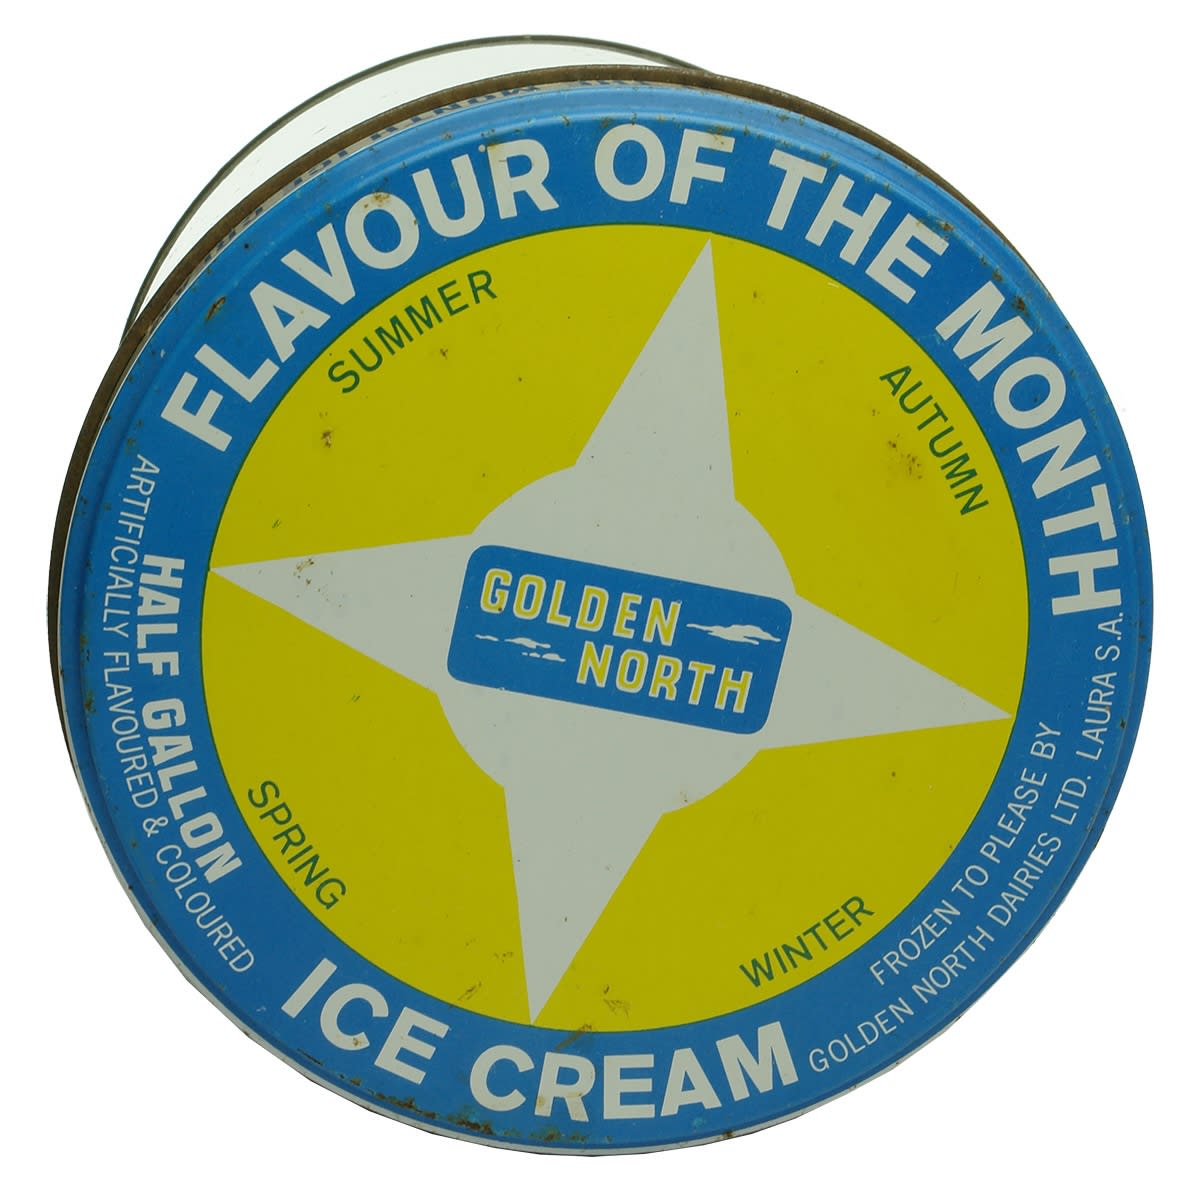 Ice Cream Tin. Golden North Dairies Ltd, Laura. Flavour of the Month. (South Australia).